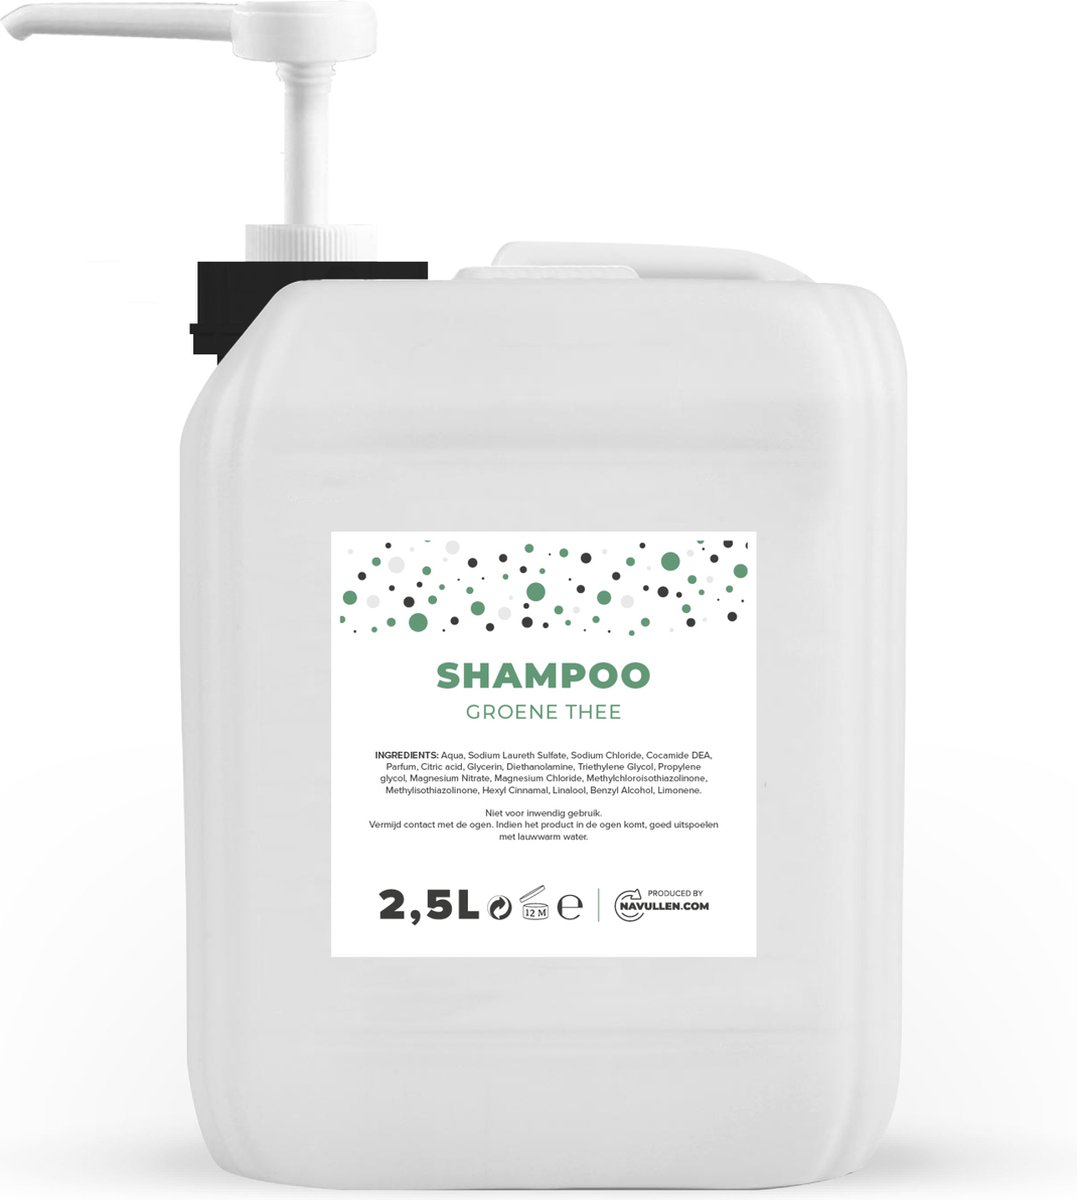 Shampoo - Groene thee - 2,5 Liter Jerrycan - Met pomp - Navulling - Navullen